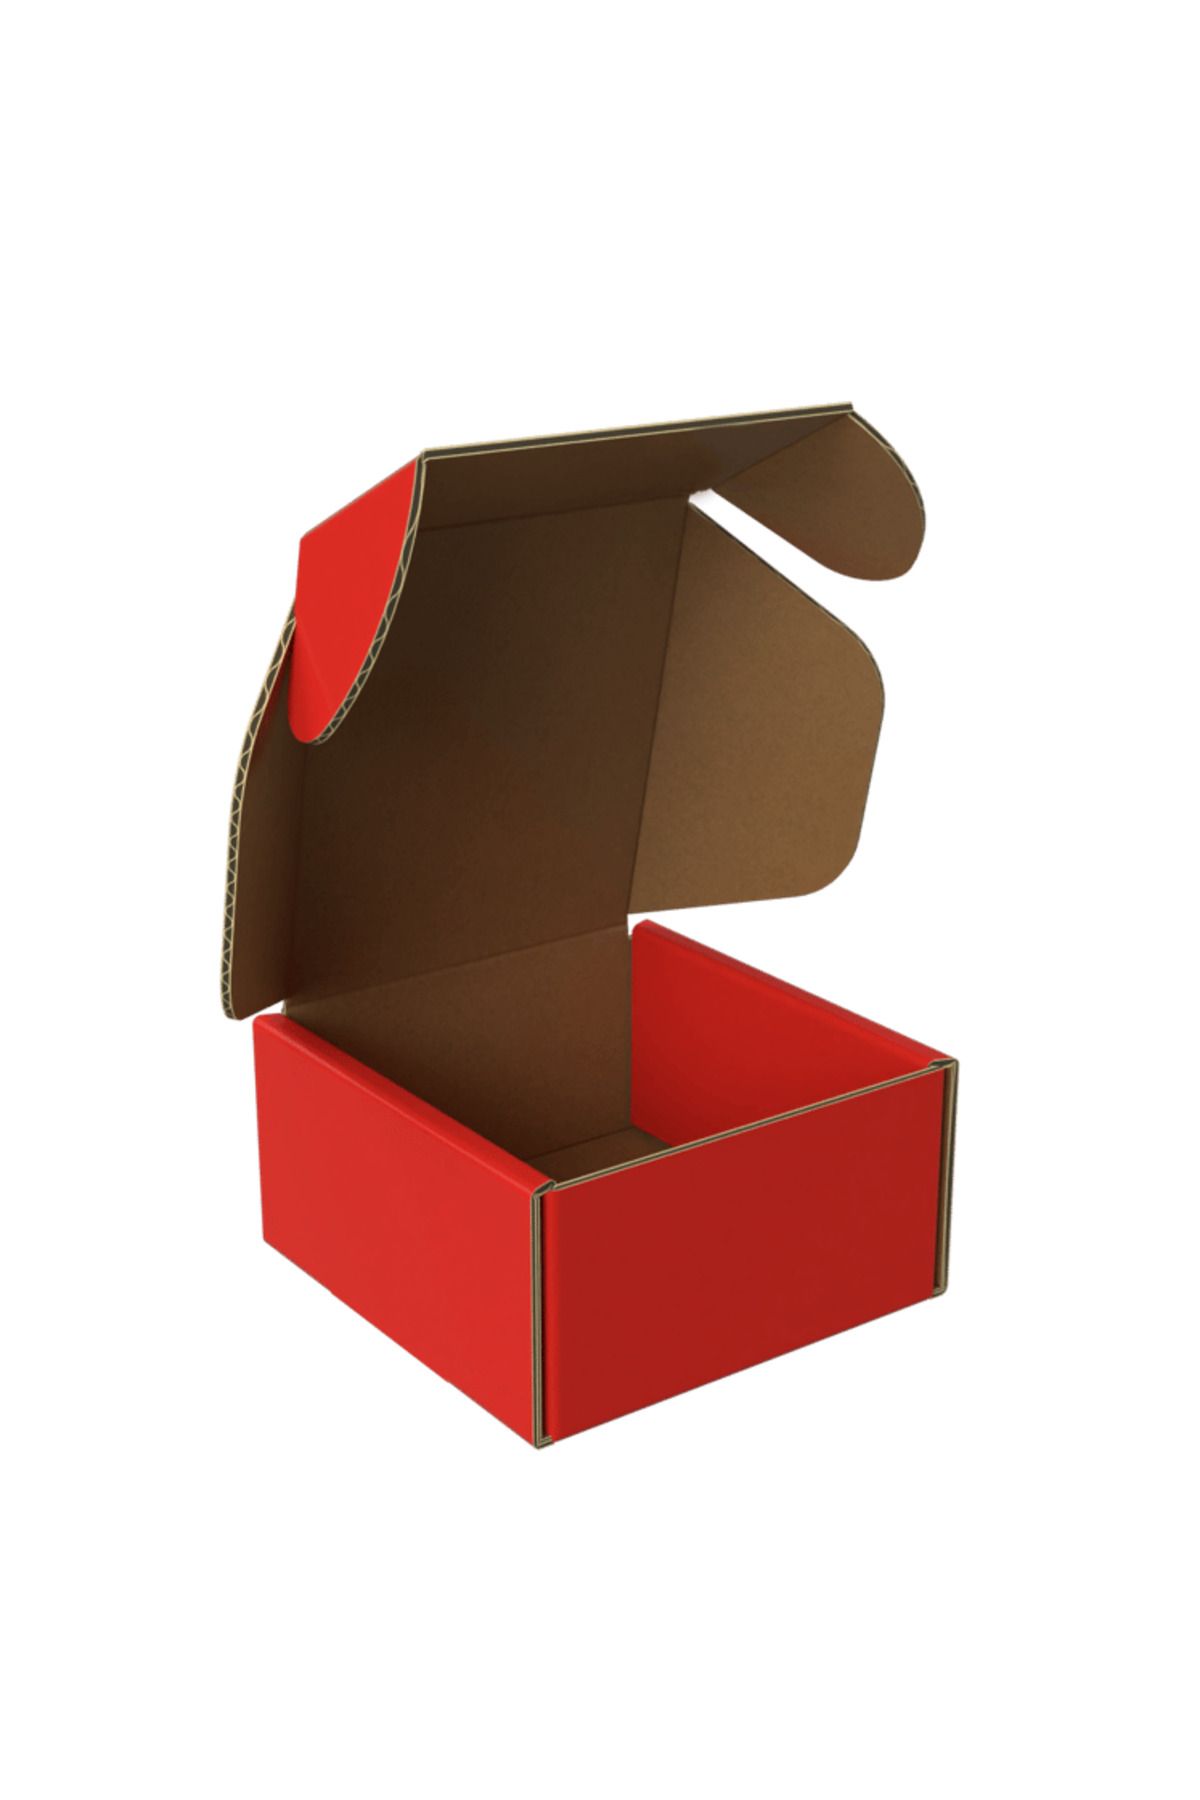 Packanya 8x8x4 - 100 Adet Kırmızı Kilitli E Ticaret Karton Kargo Kutusu